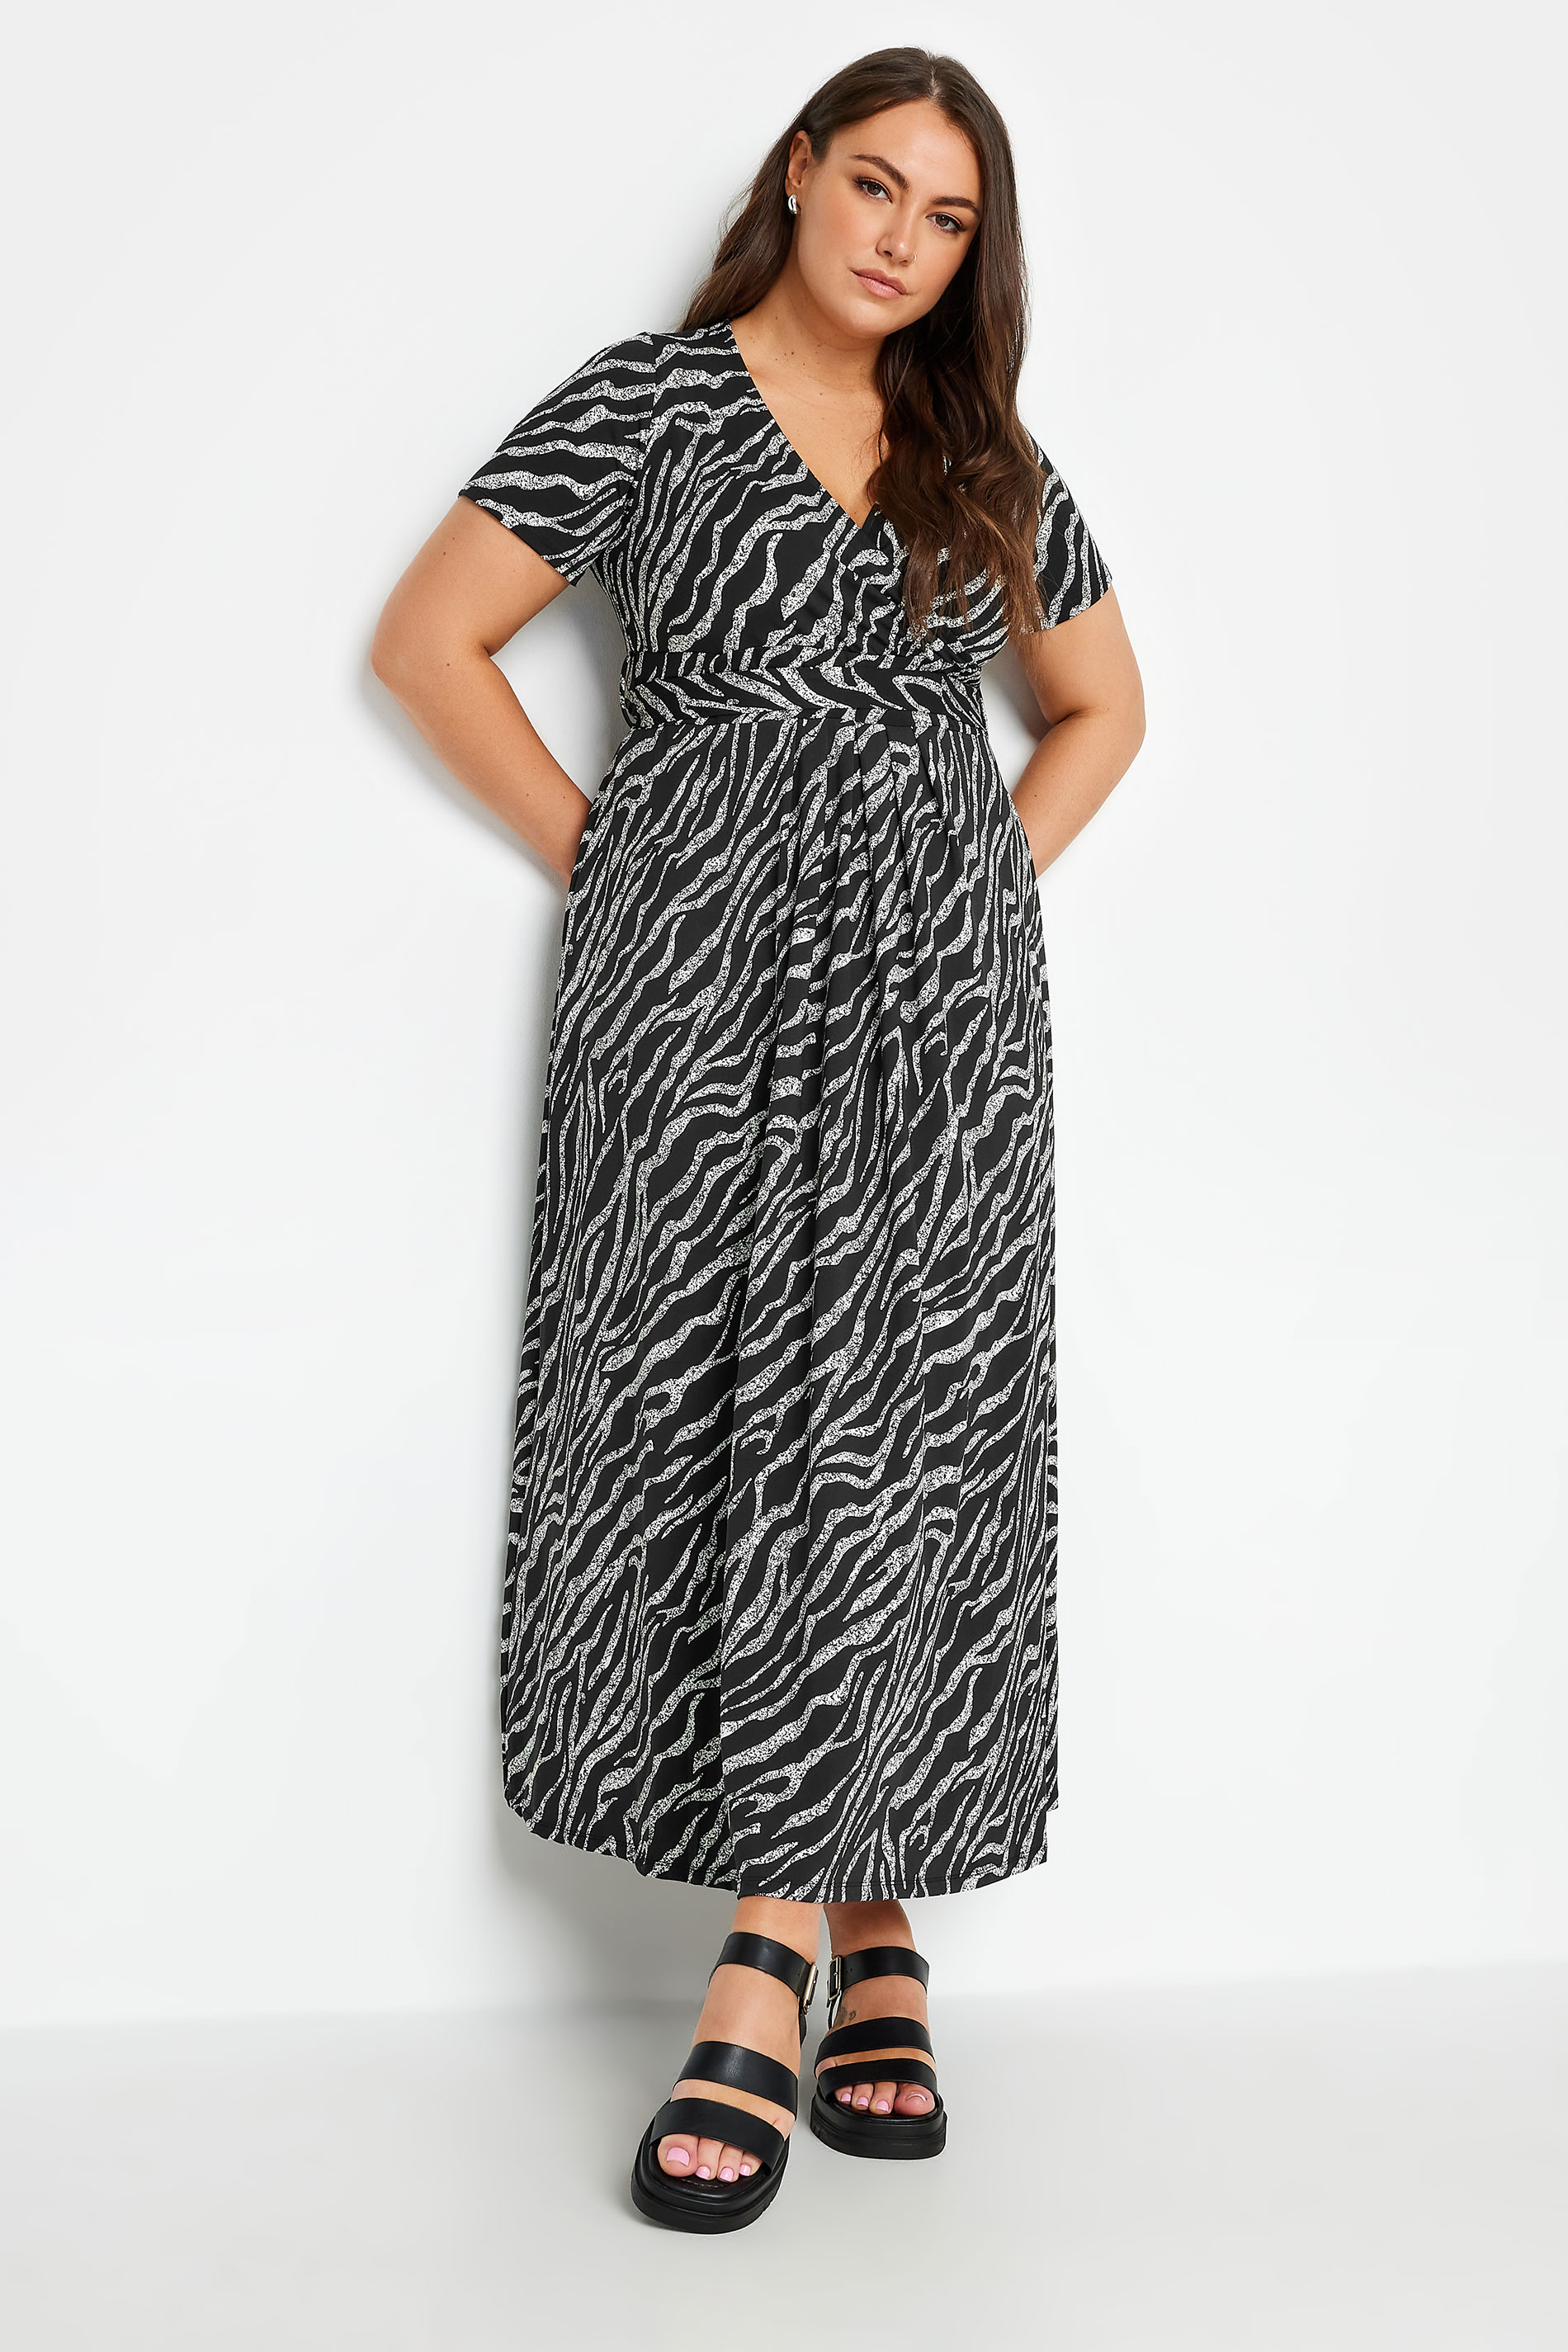 YOURS Plus Size Black Zebra Print Wrap Maxi Dress | Yours Clothing 1